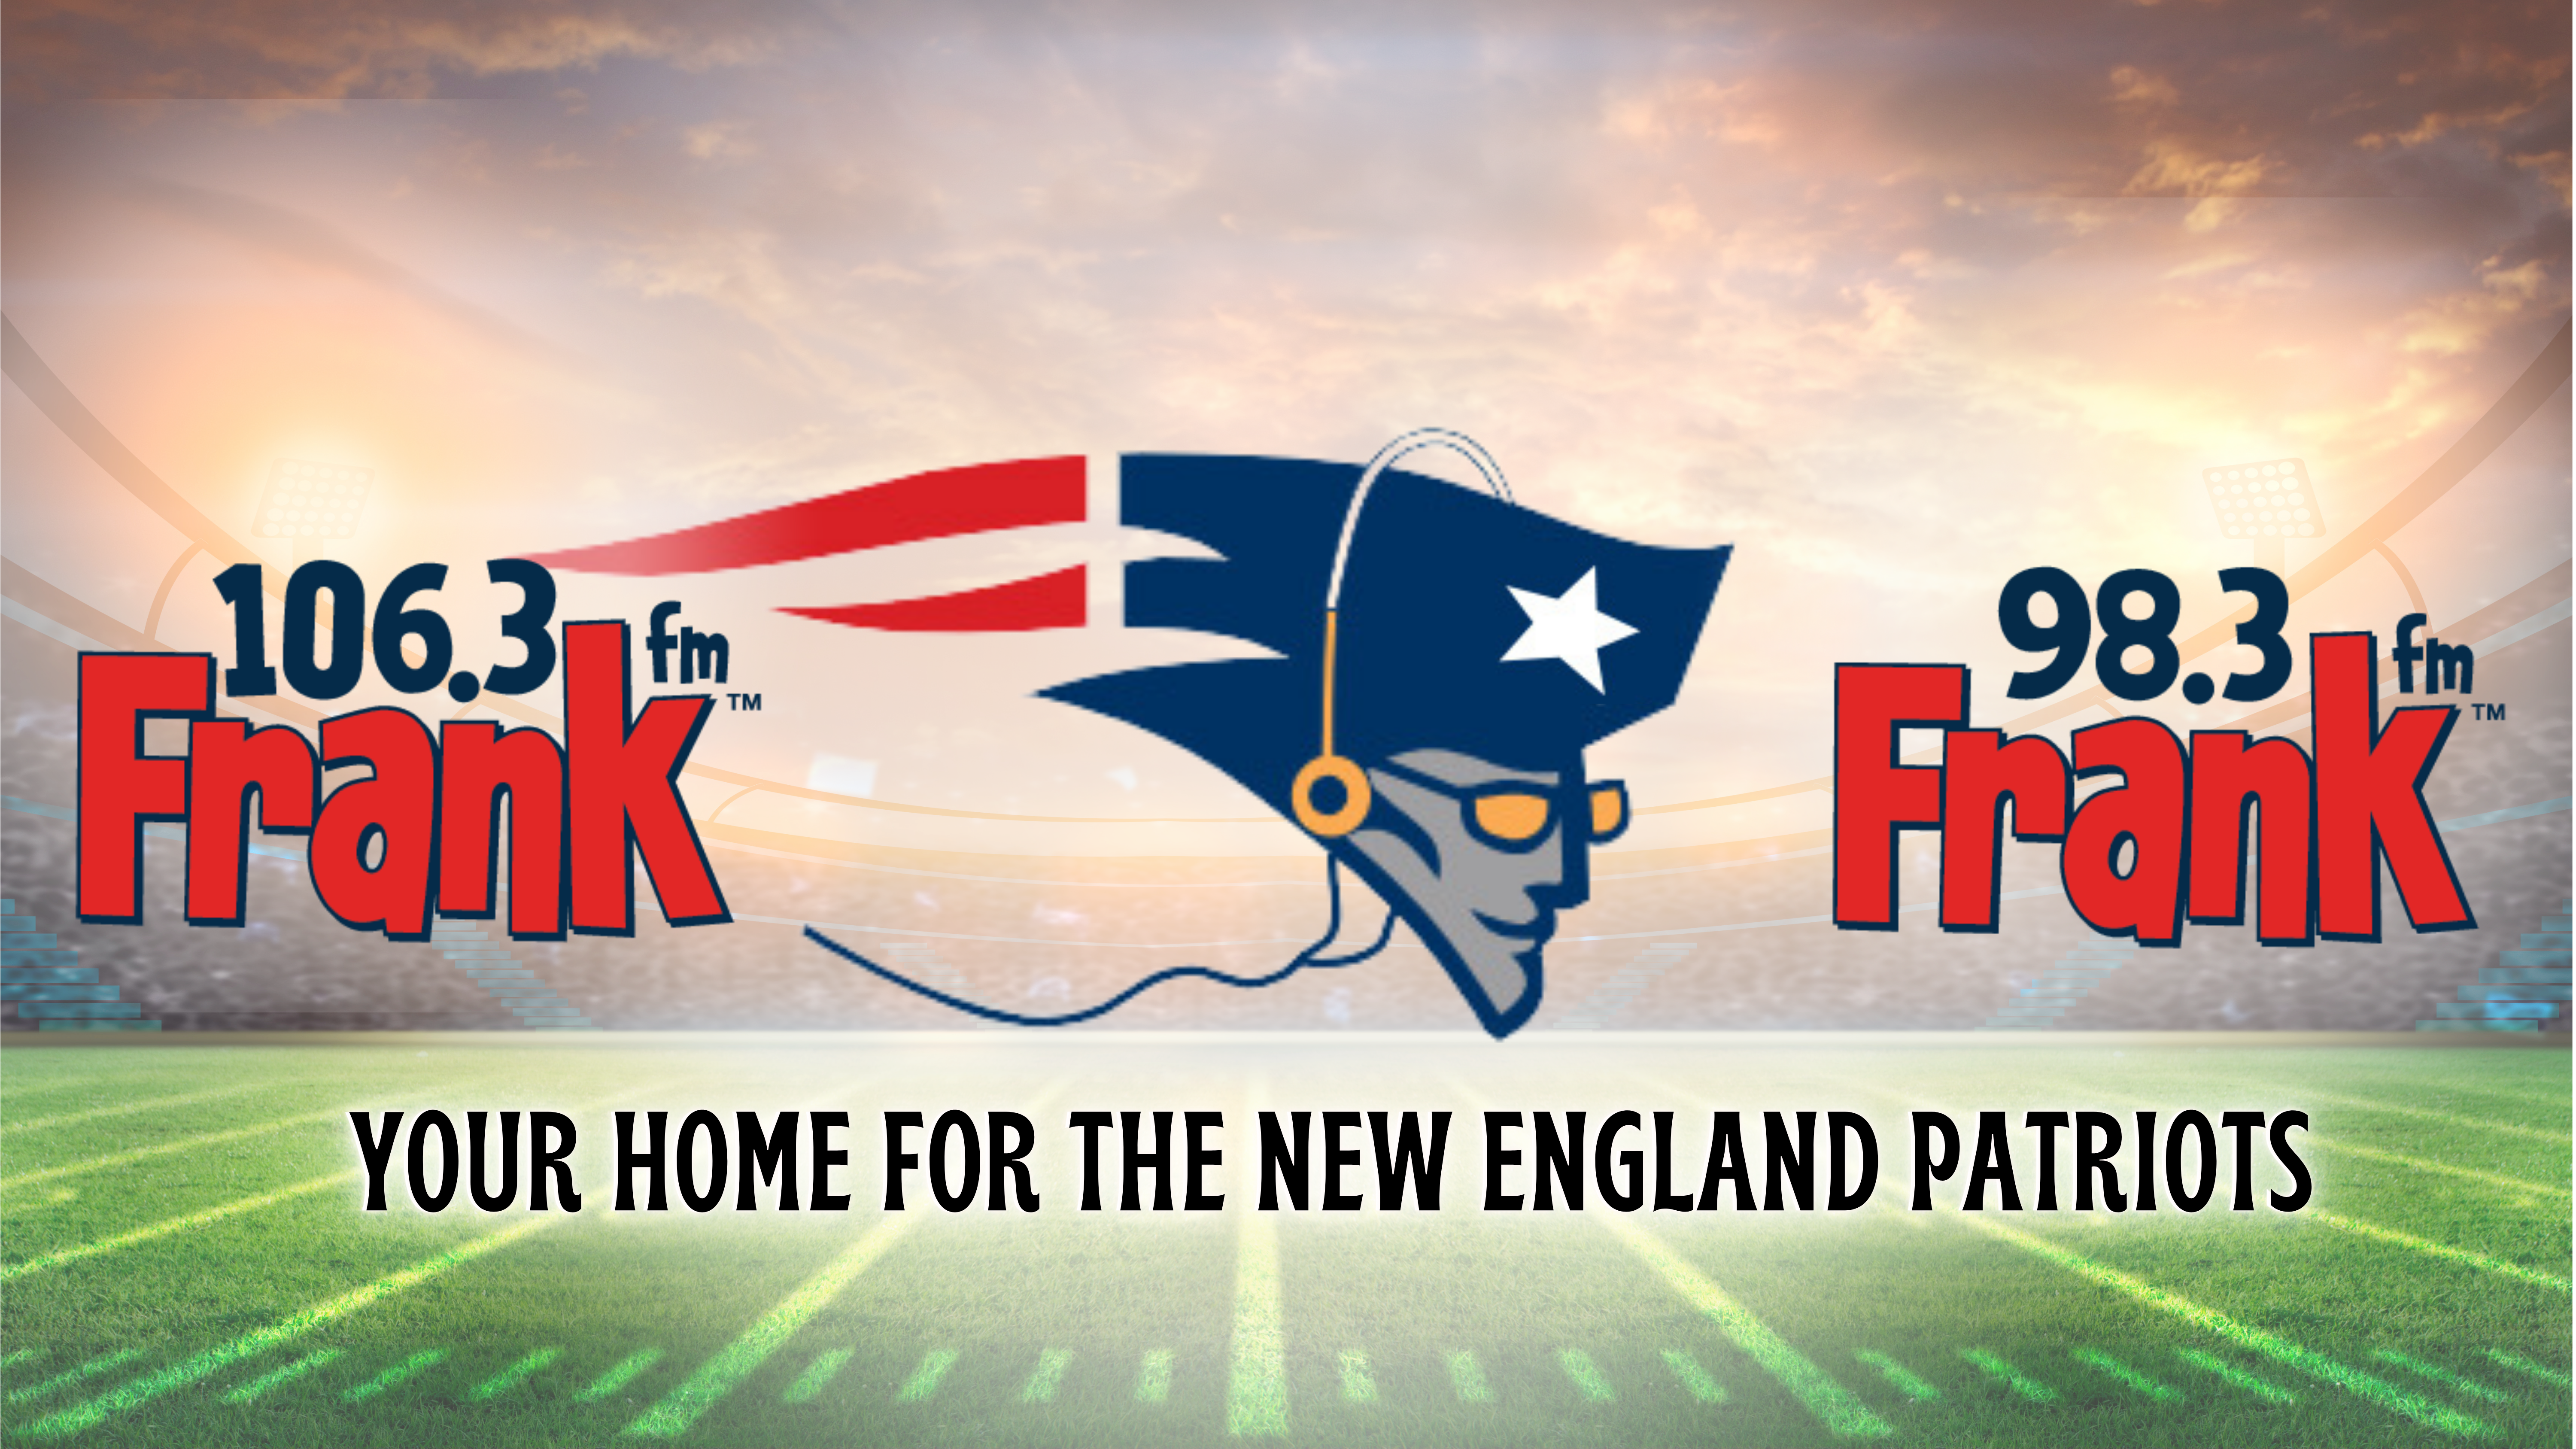 New England Patriots on 106.3 & 98.3 Frank FM